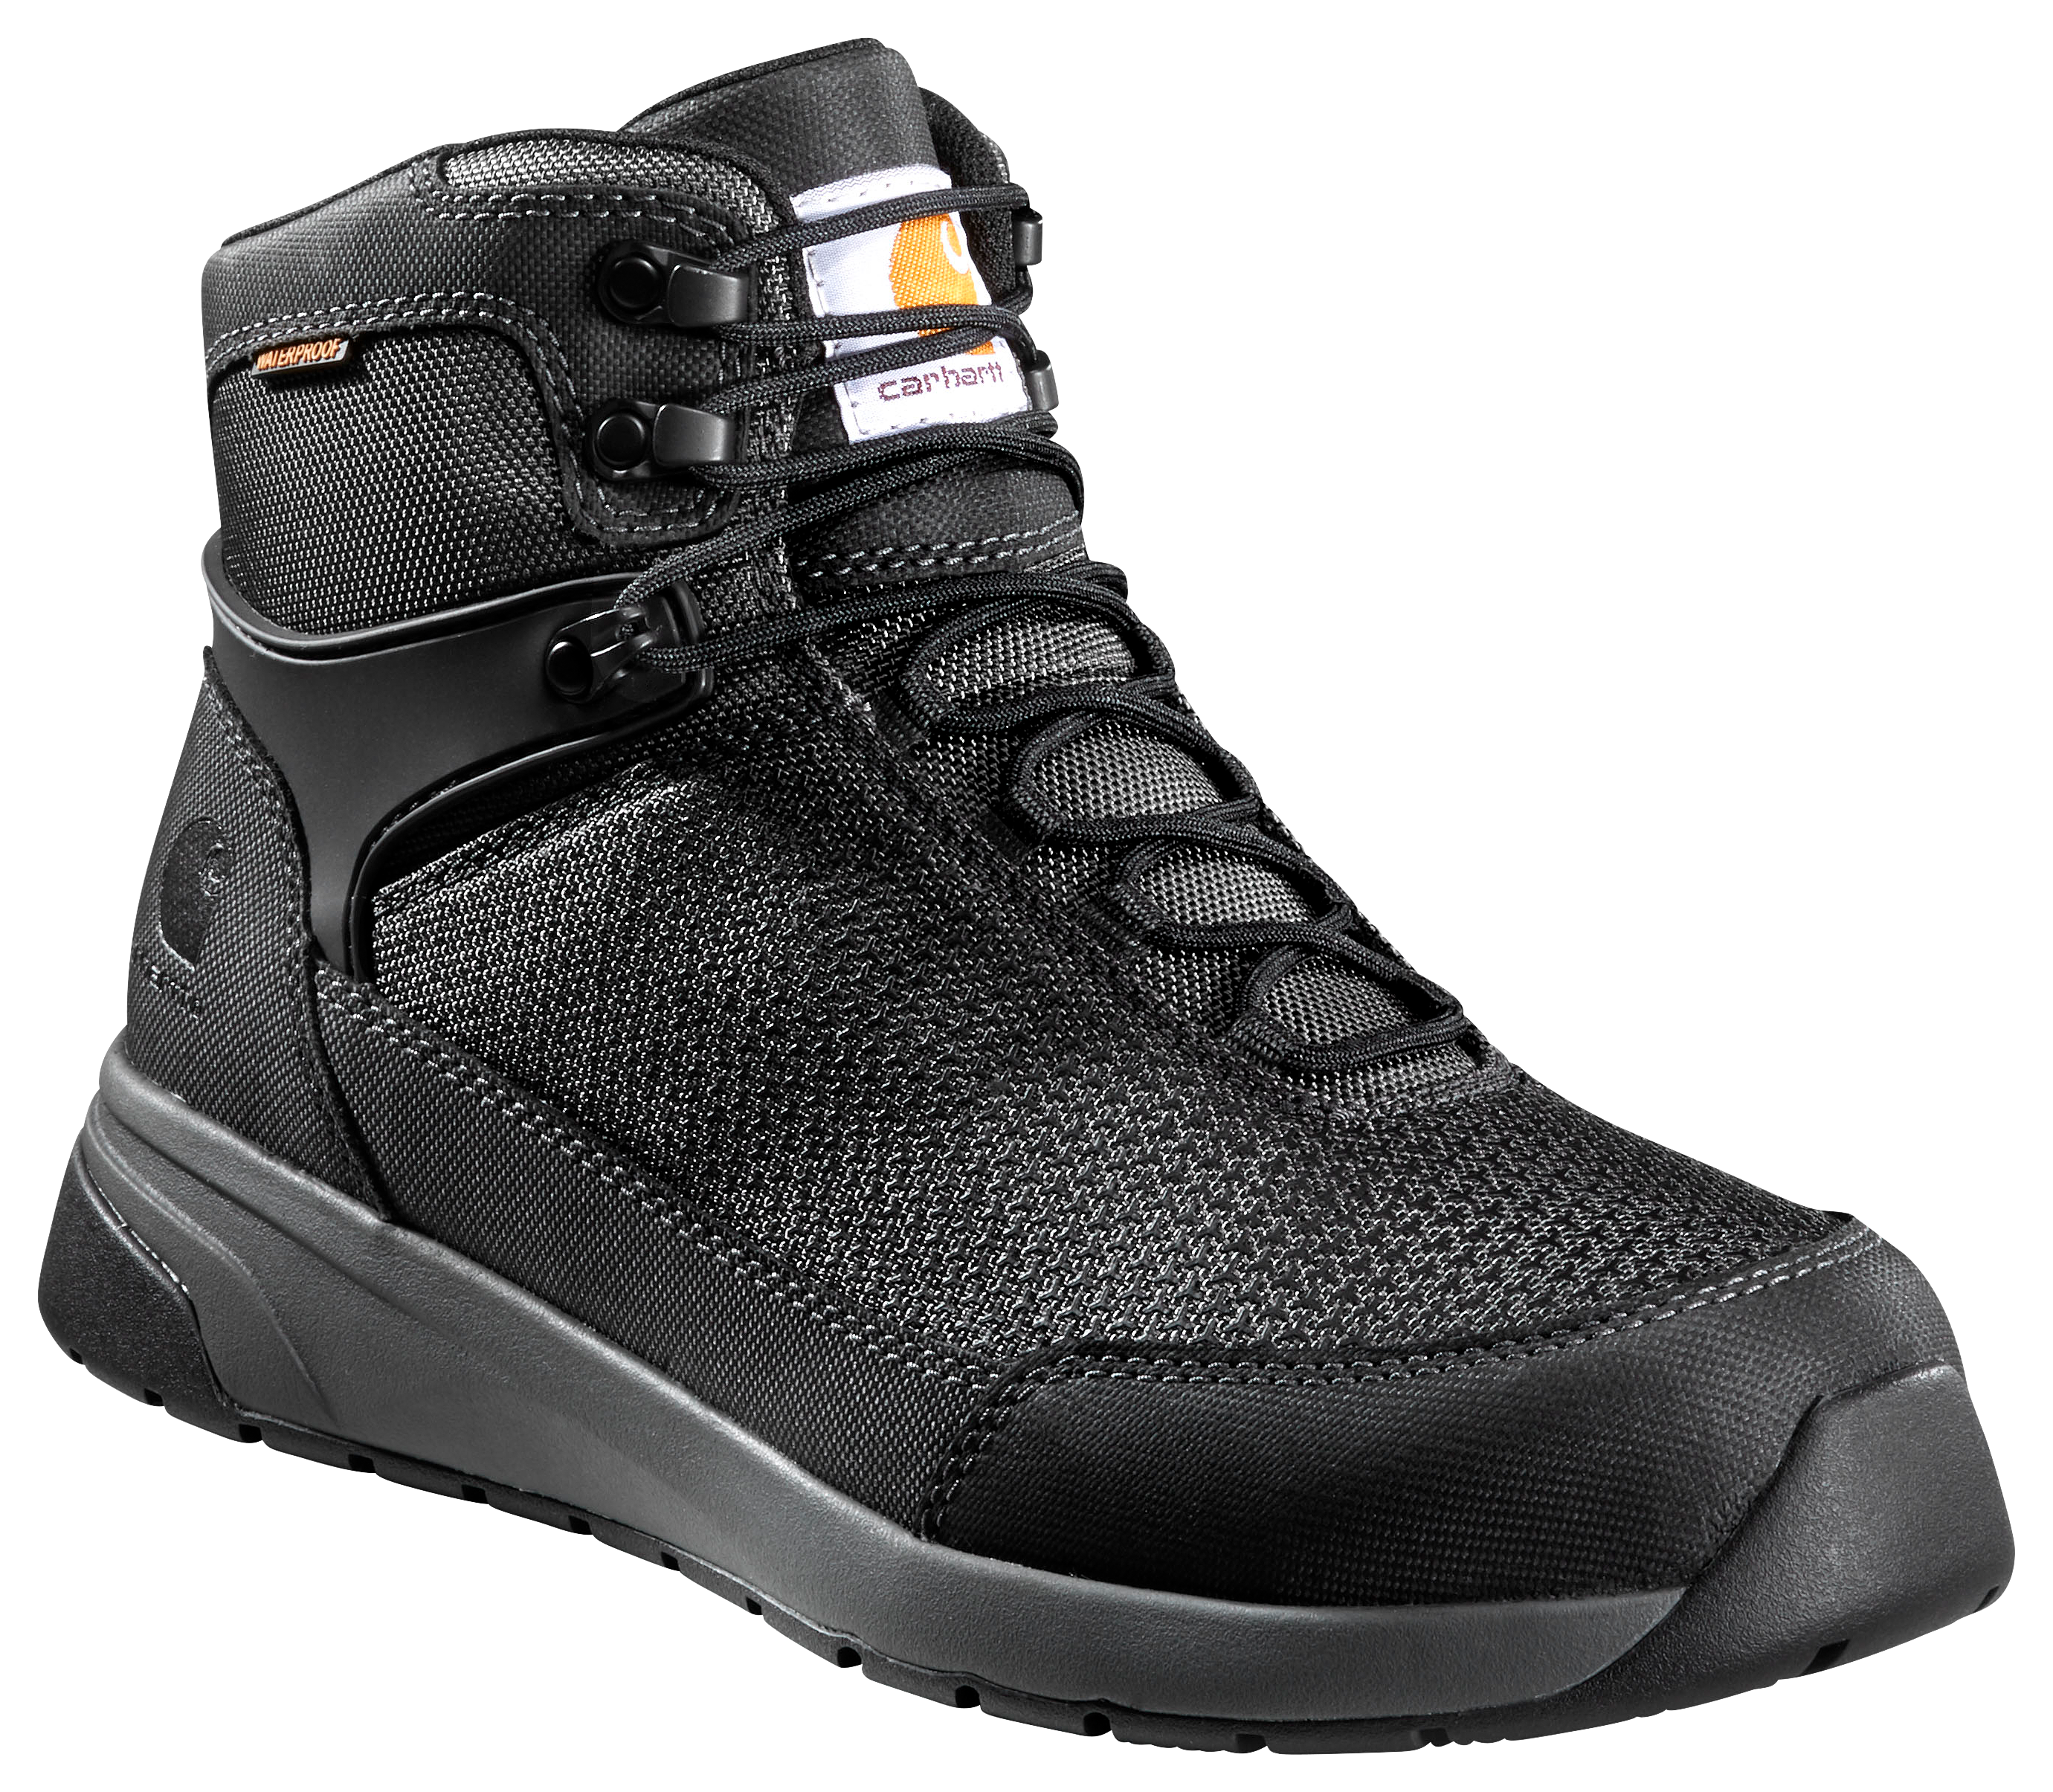 Carhartt Force 6"" Nano Composite-Toe Work Boots for Men - Black - 8W